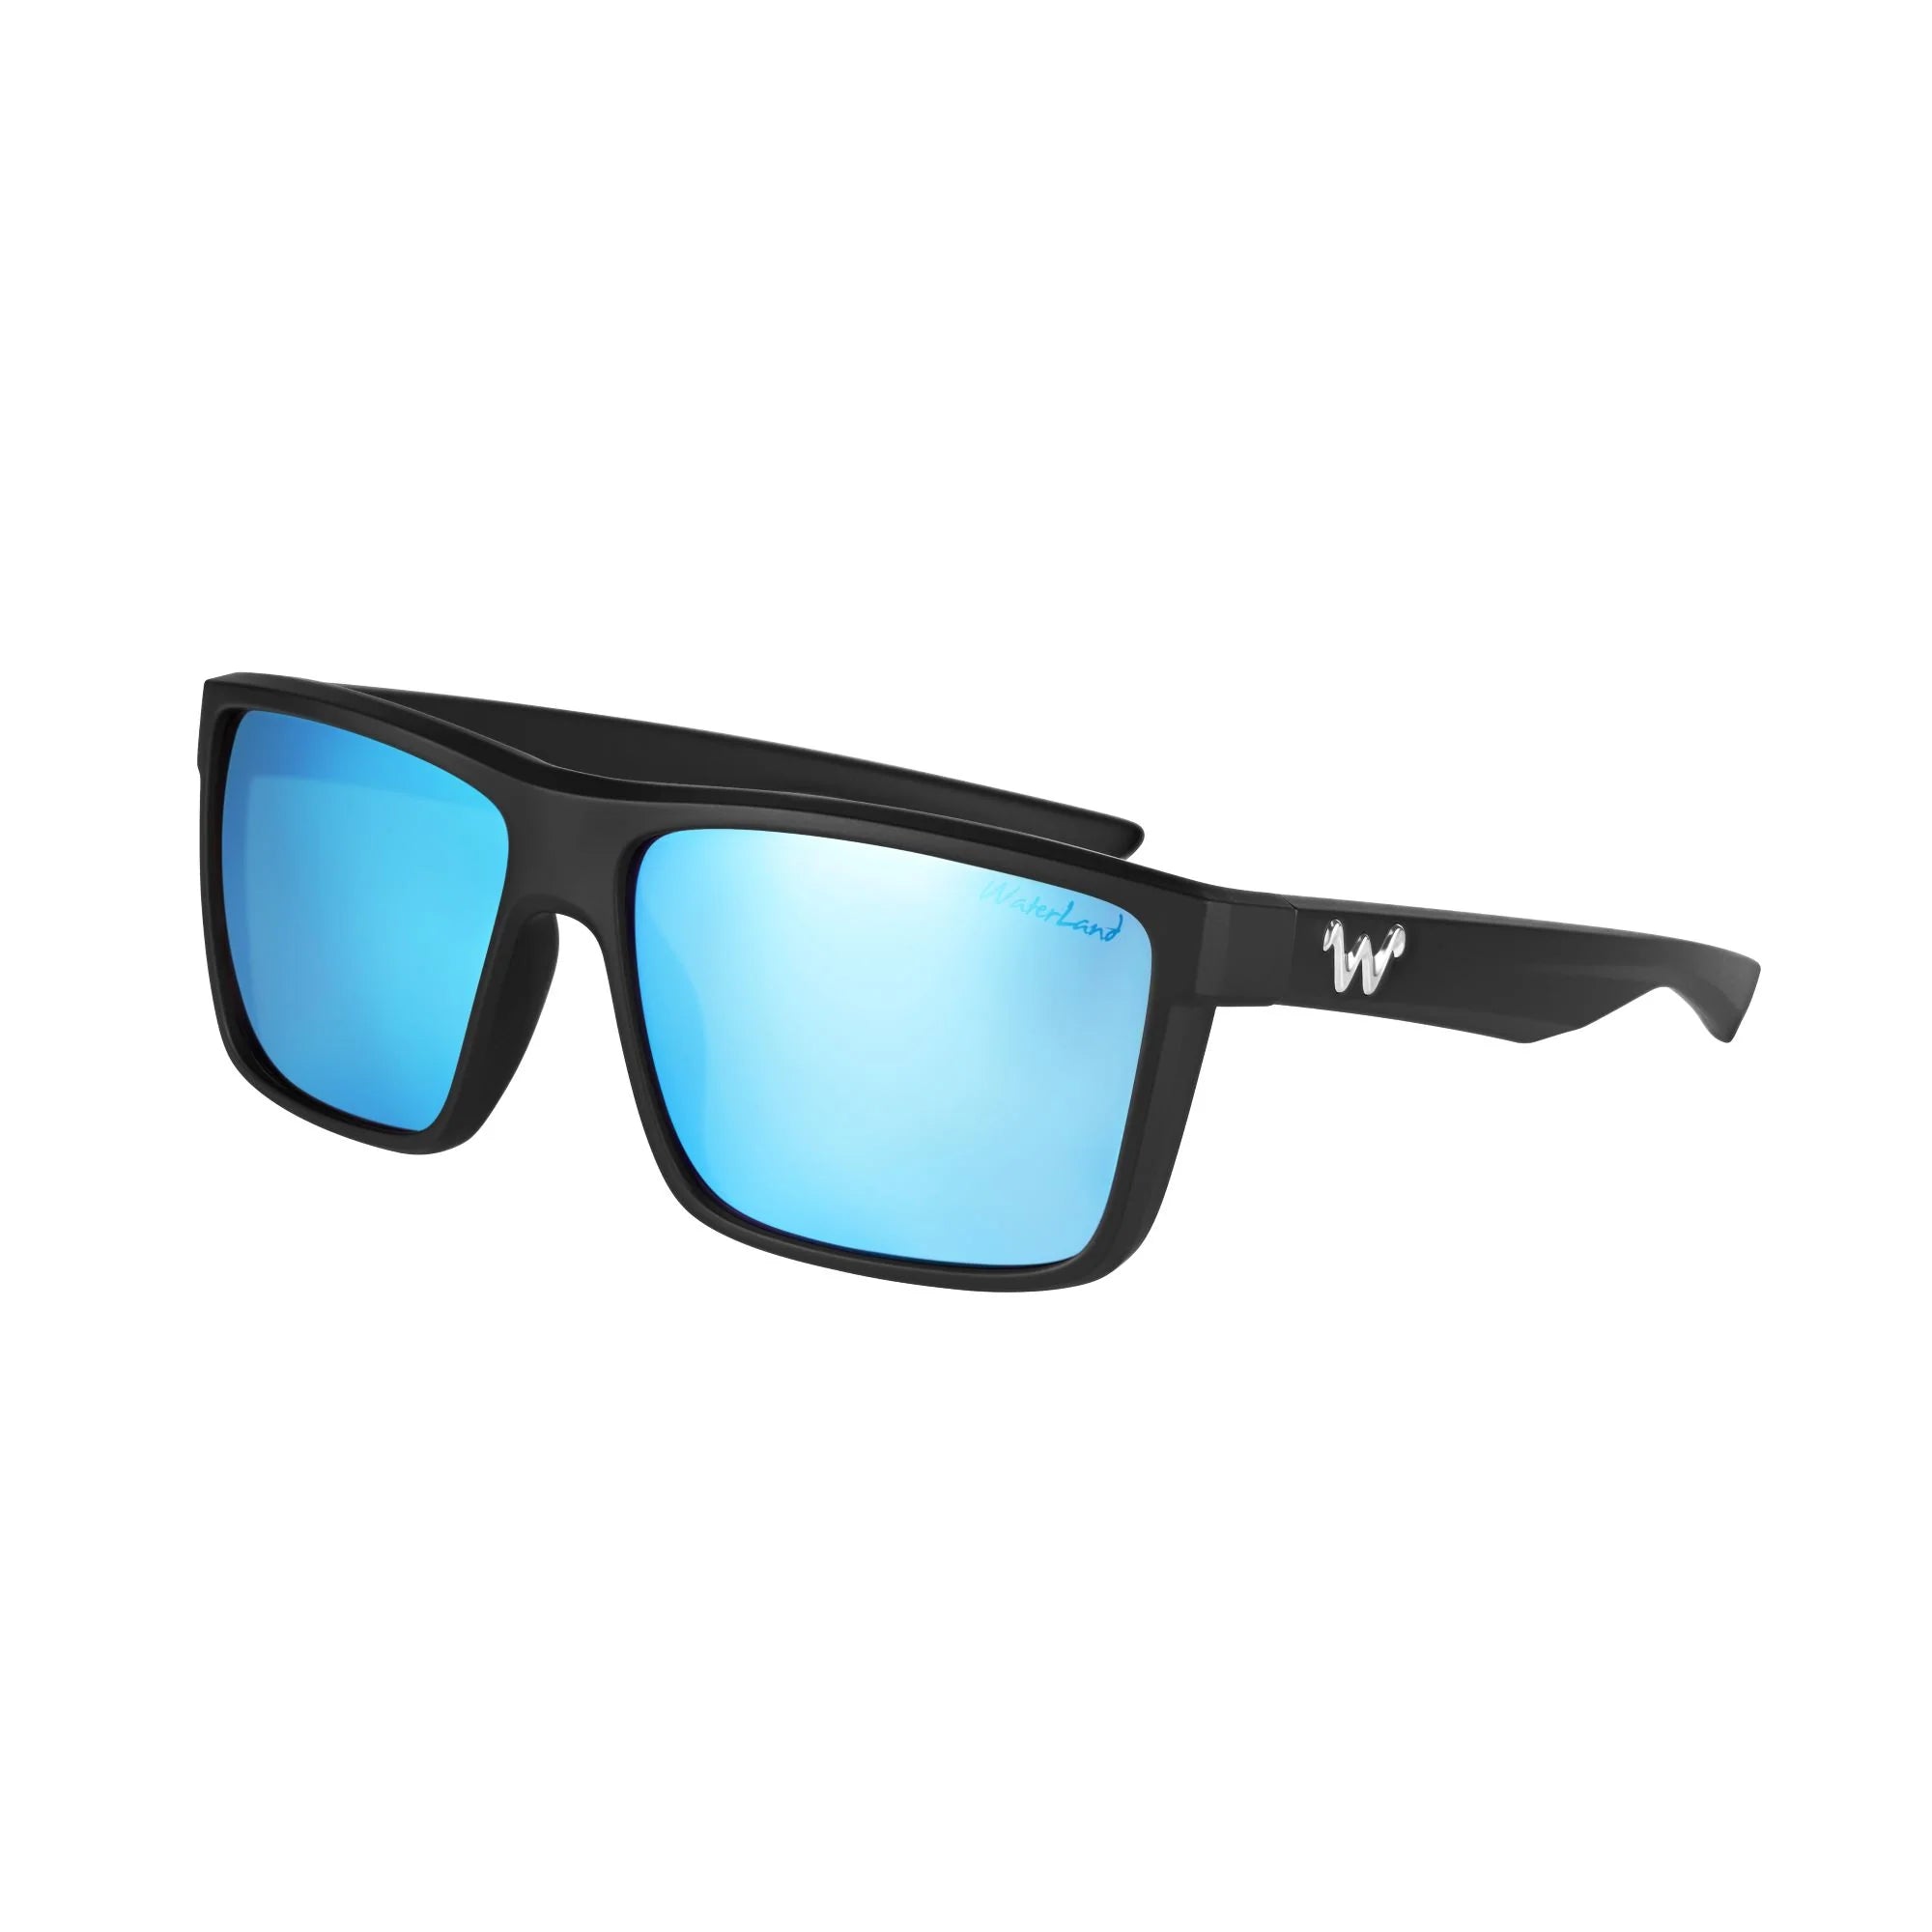 Waterland Sobro Sunglasses Brown Tortoise/Blue Mirro